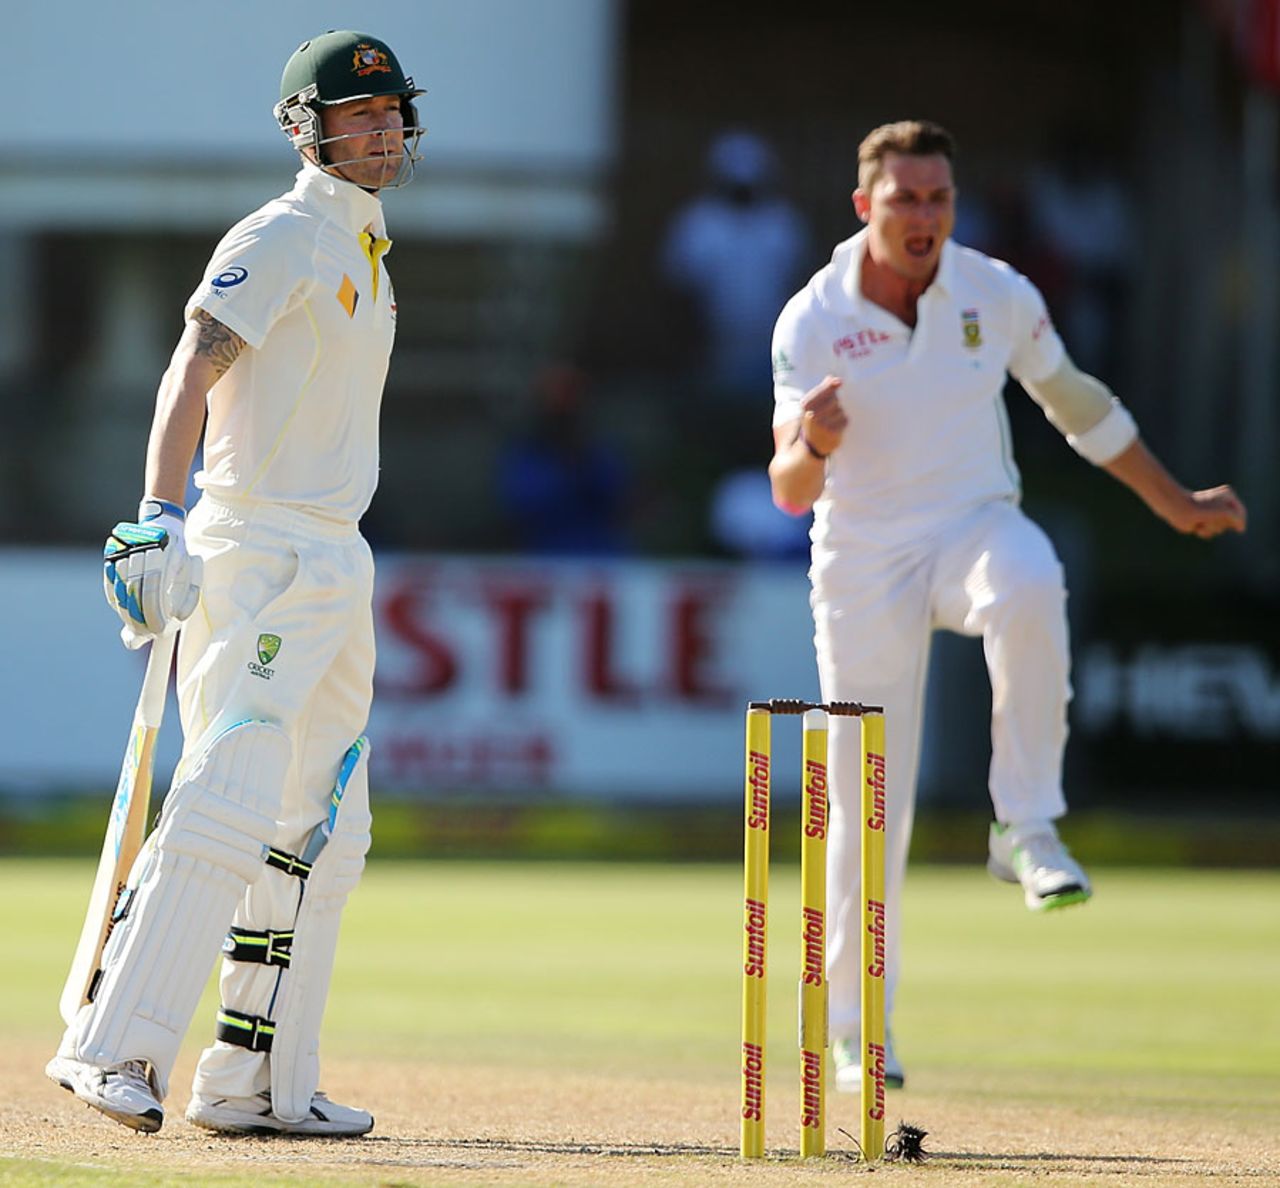 Michael Clarke looks back after edging to second slip, South Africa v Australia, 2nd Test, Port Elizabeth, 4th day, February 23, 2014